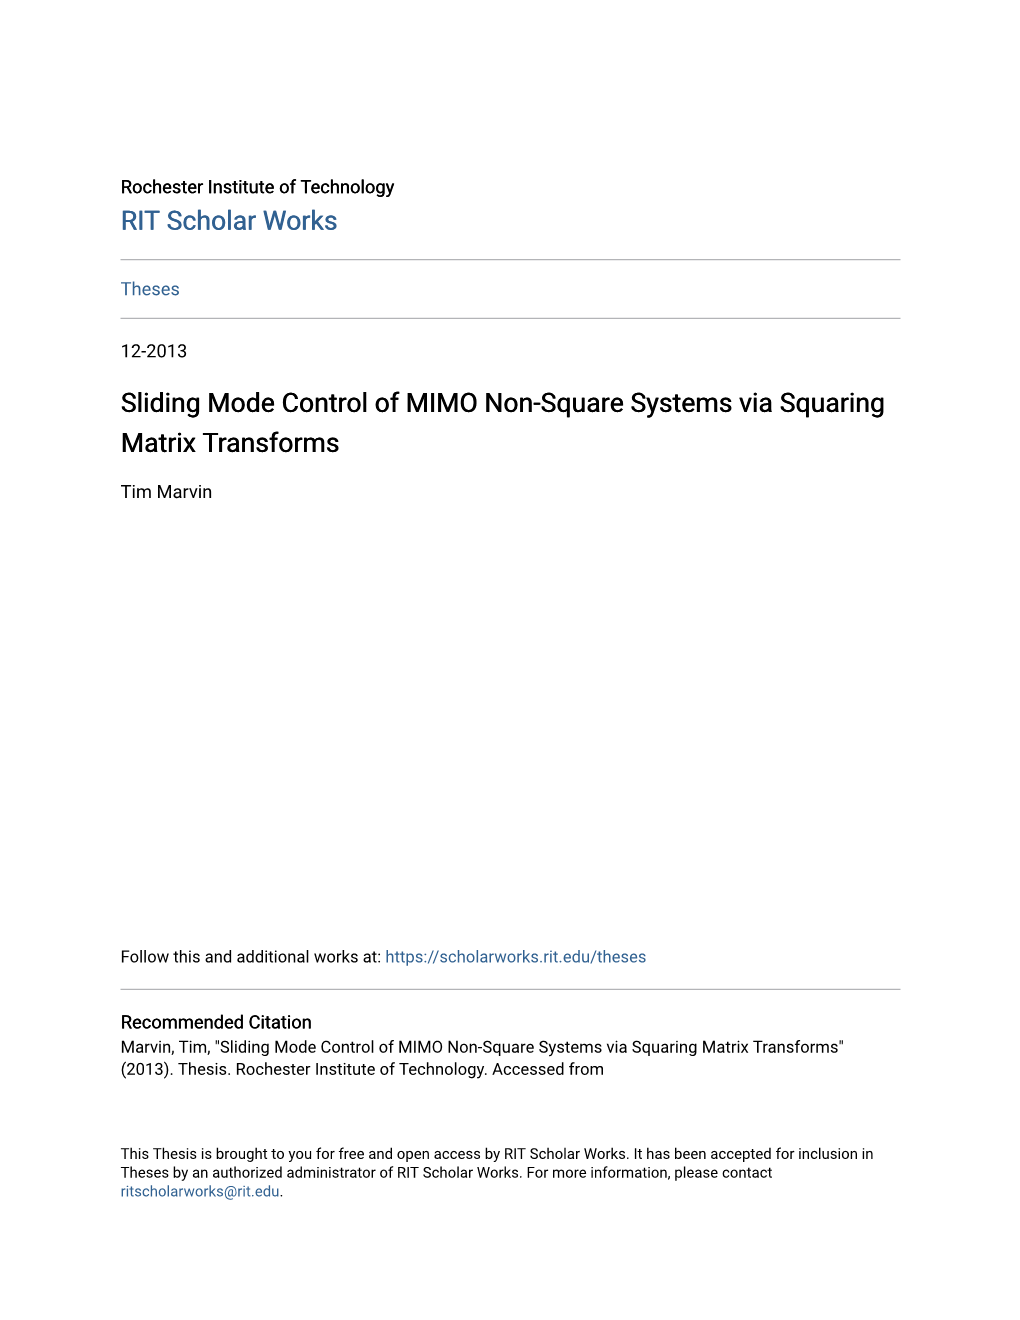 Sliding Mode Control of MIMO Non-Square Systems Via Squaring Matrix Transforms